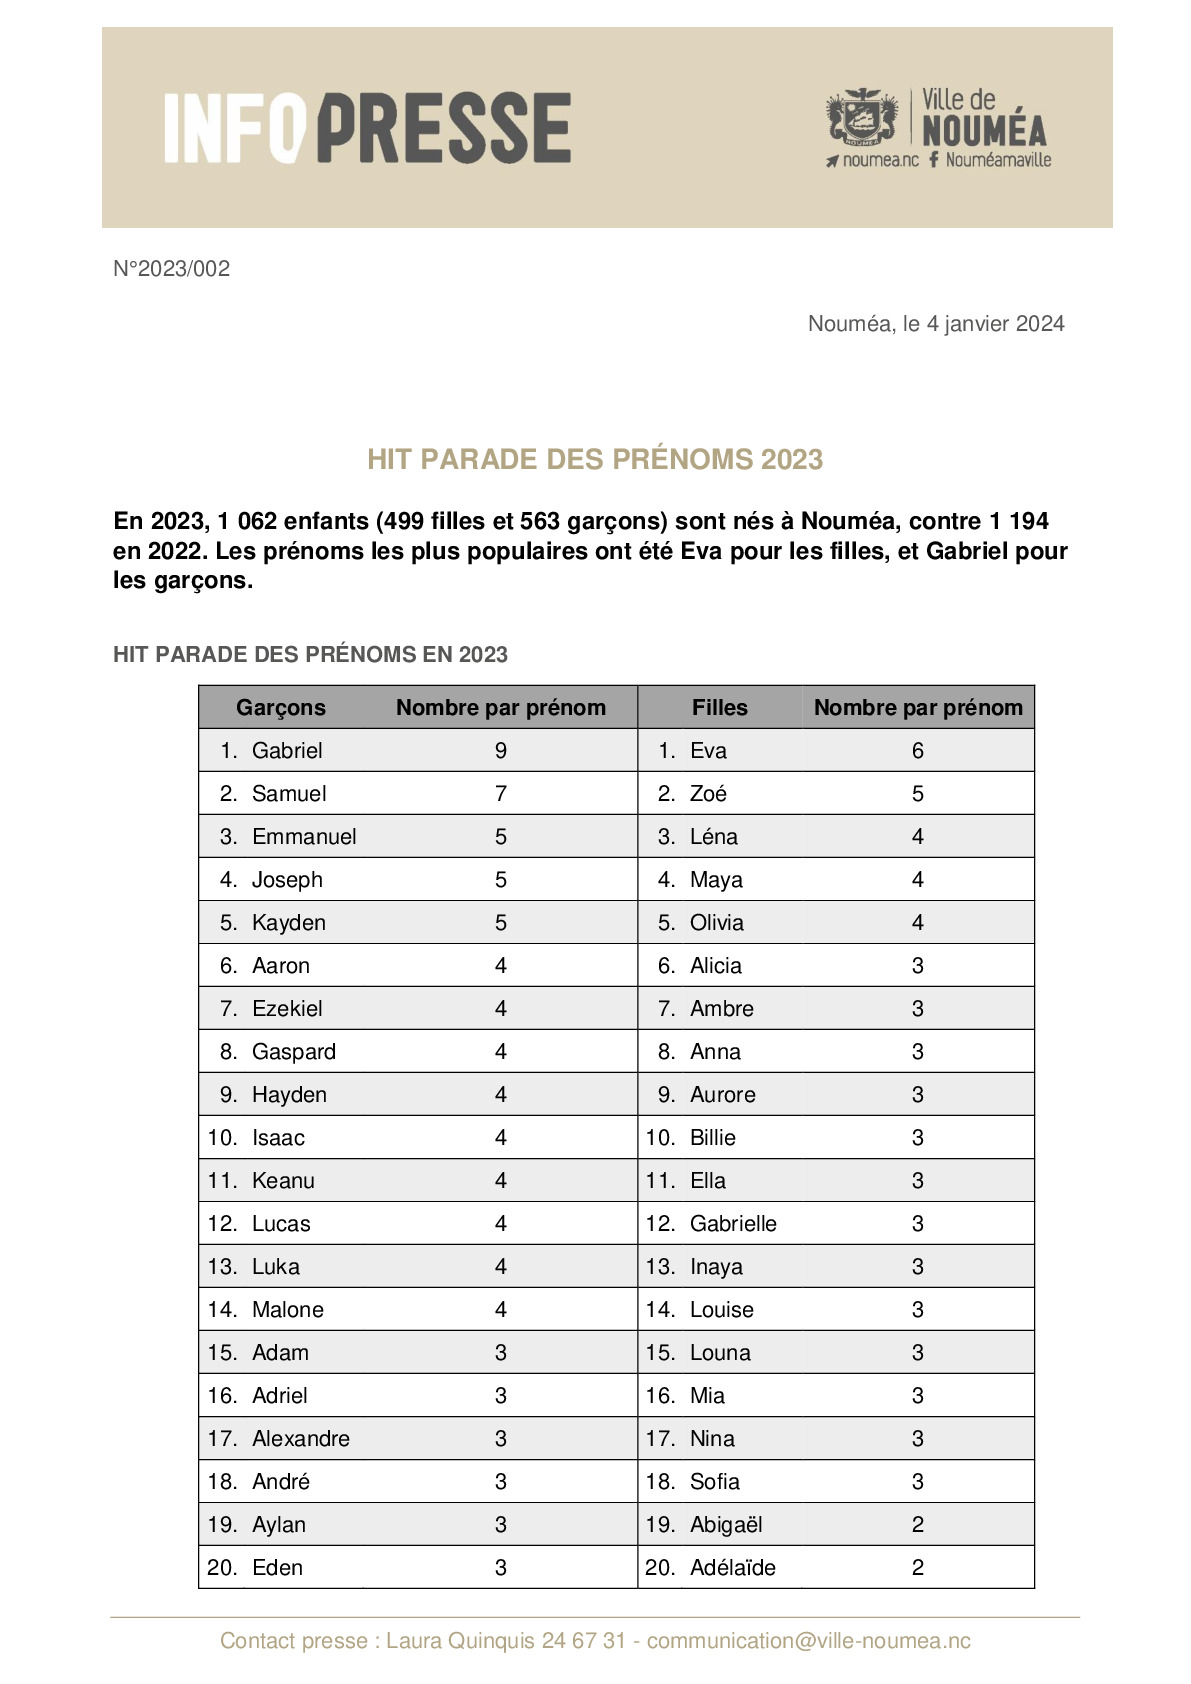 002 IP Top des prénoms 2023.pdf